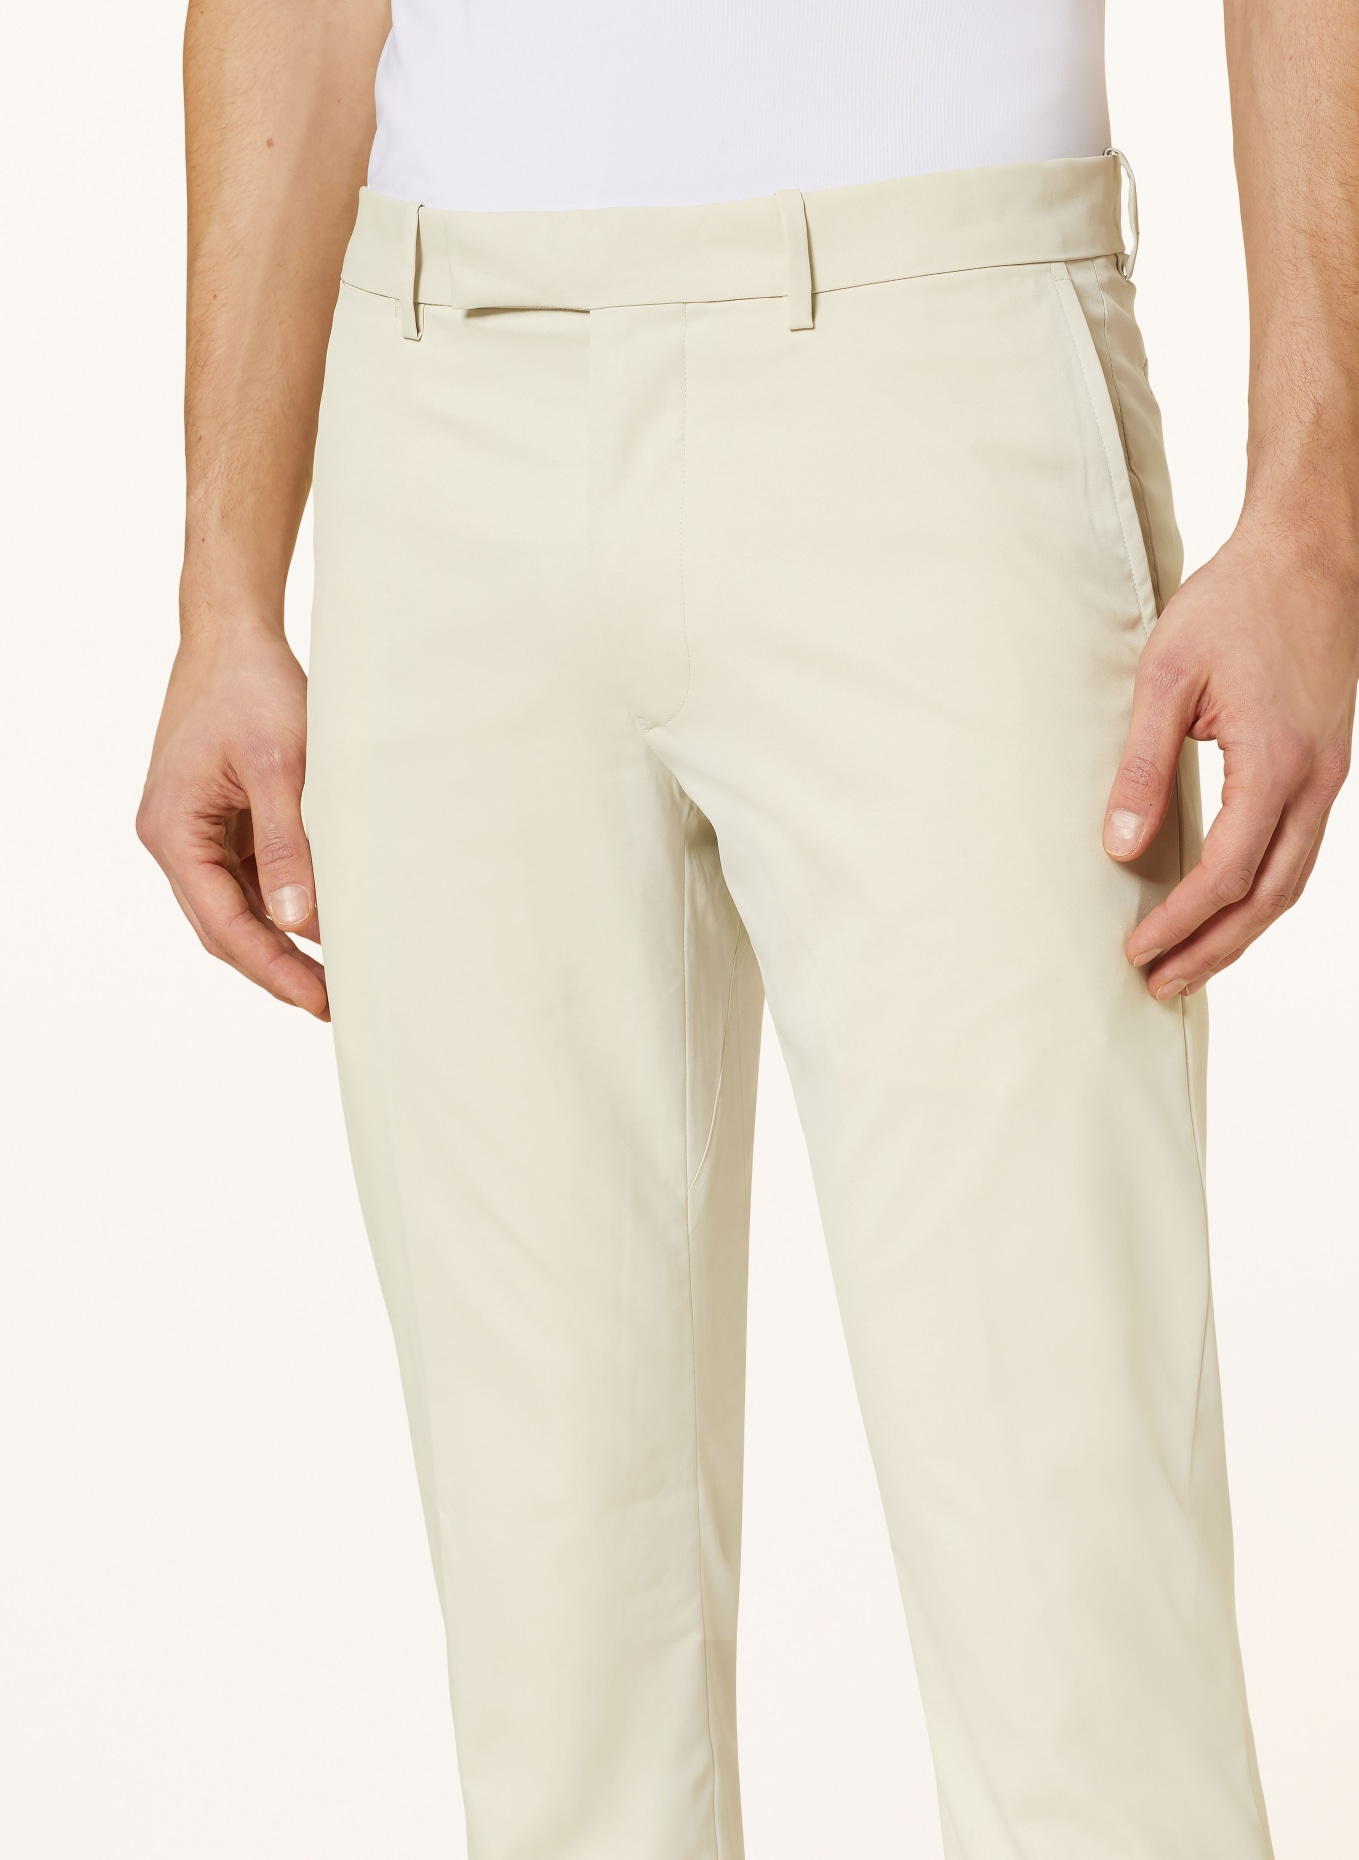 RLX Polo Ralph Lauren Slim Fit Performance Golf Pants w/ 4 Way Stretch 36 X  34 | eBay